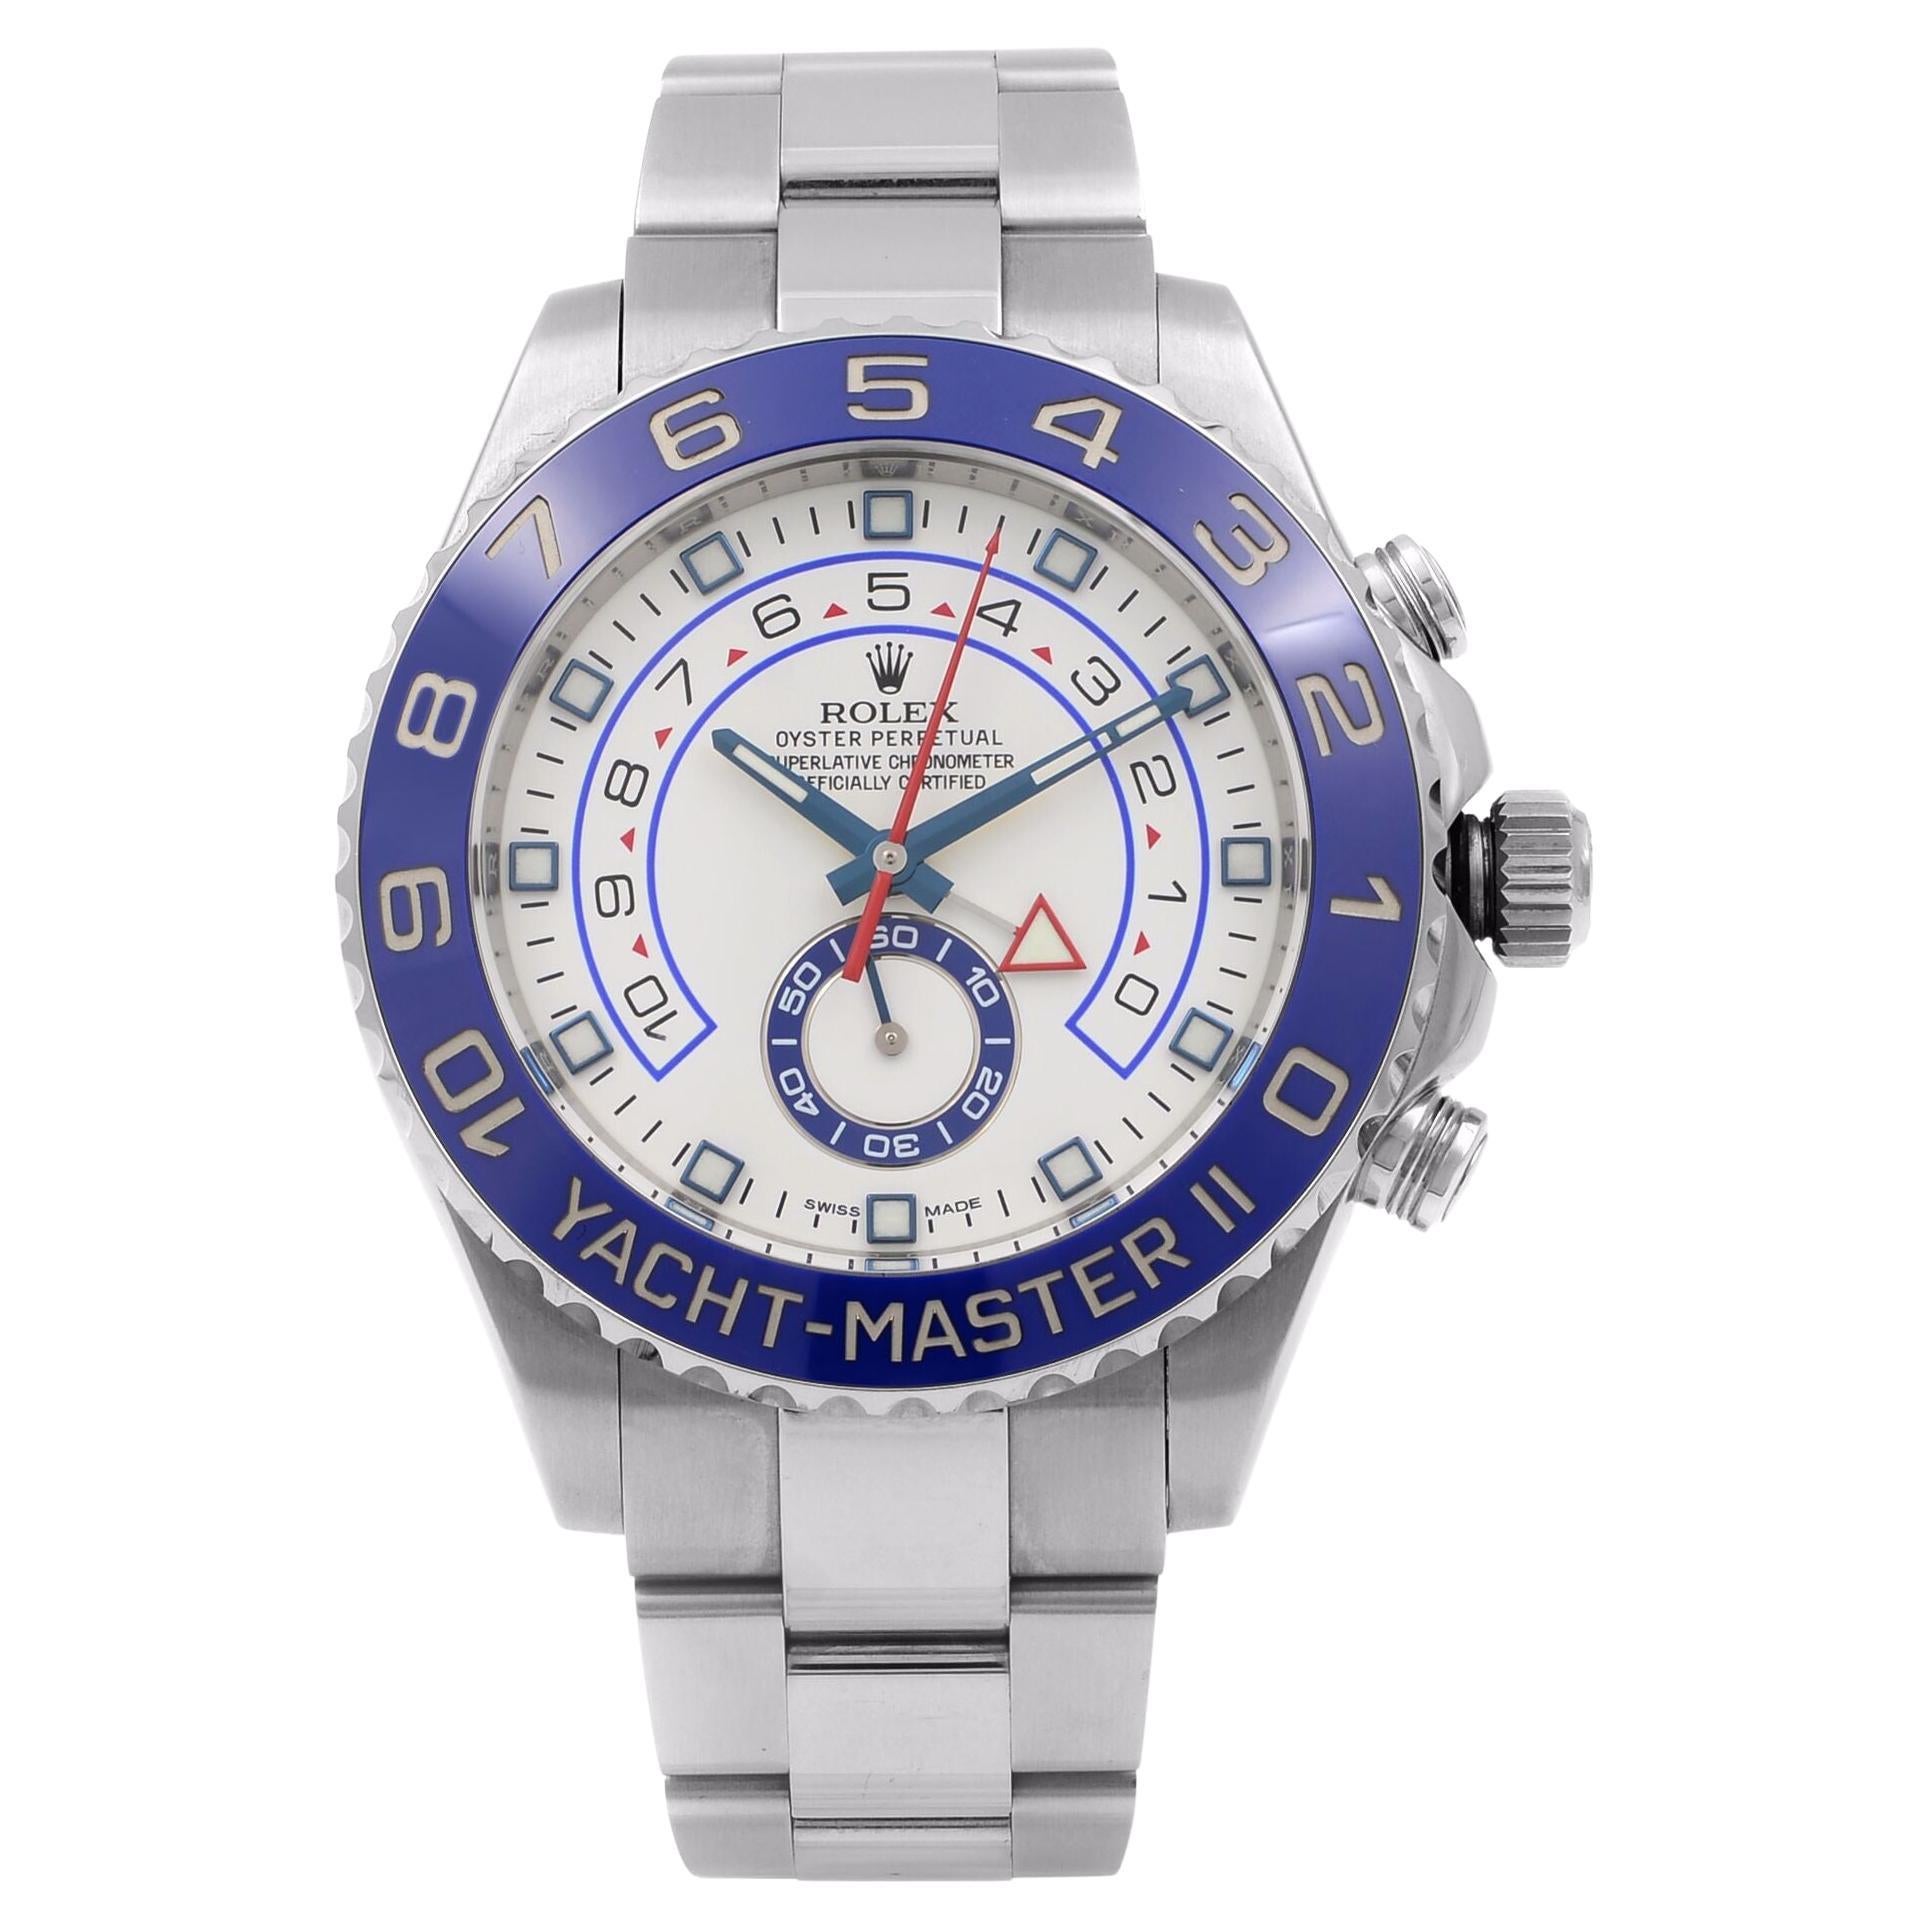 Rolex Yacht-Master II Steel Ceramic Chronograph White Dial Men Watch 116680-0002